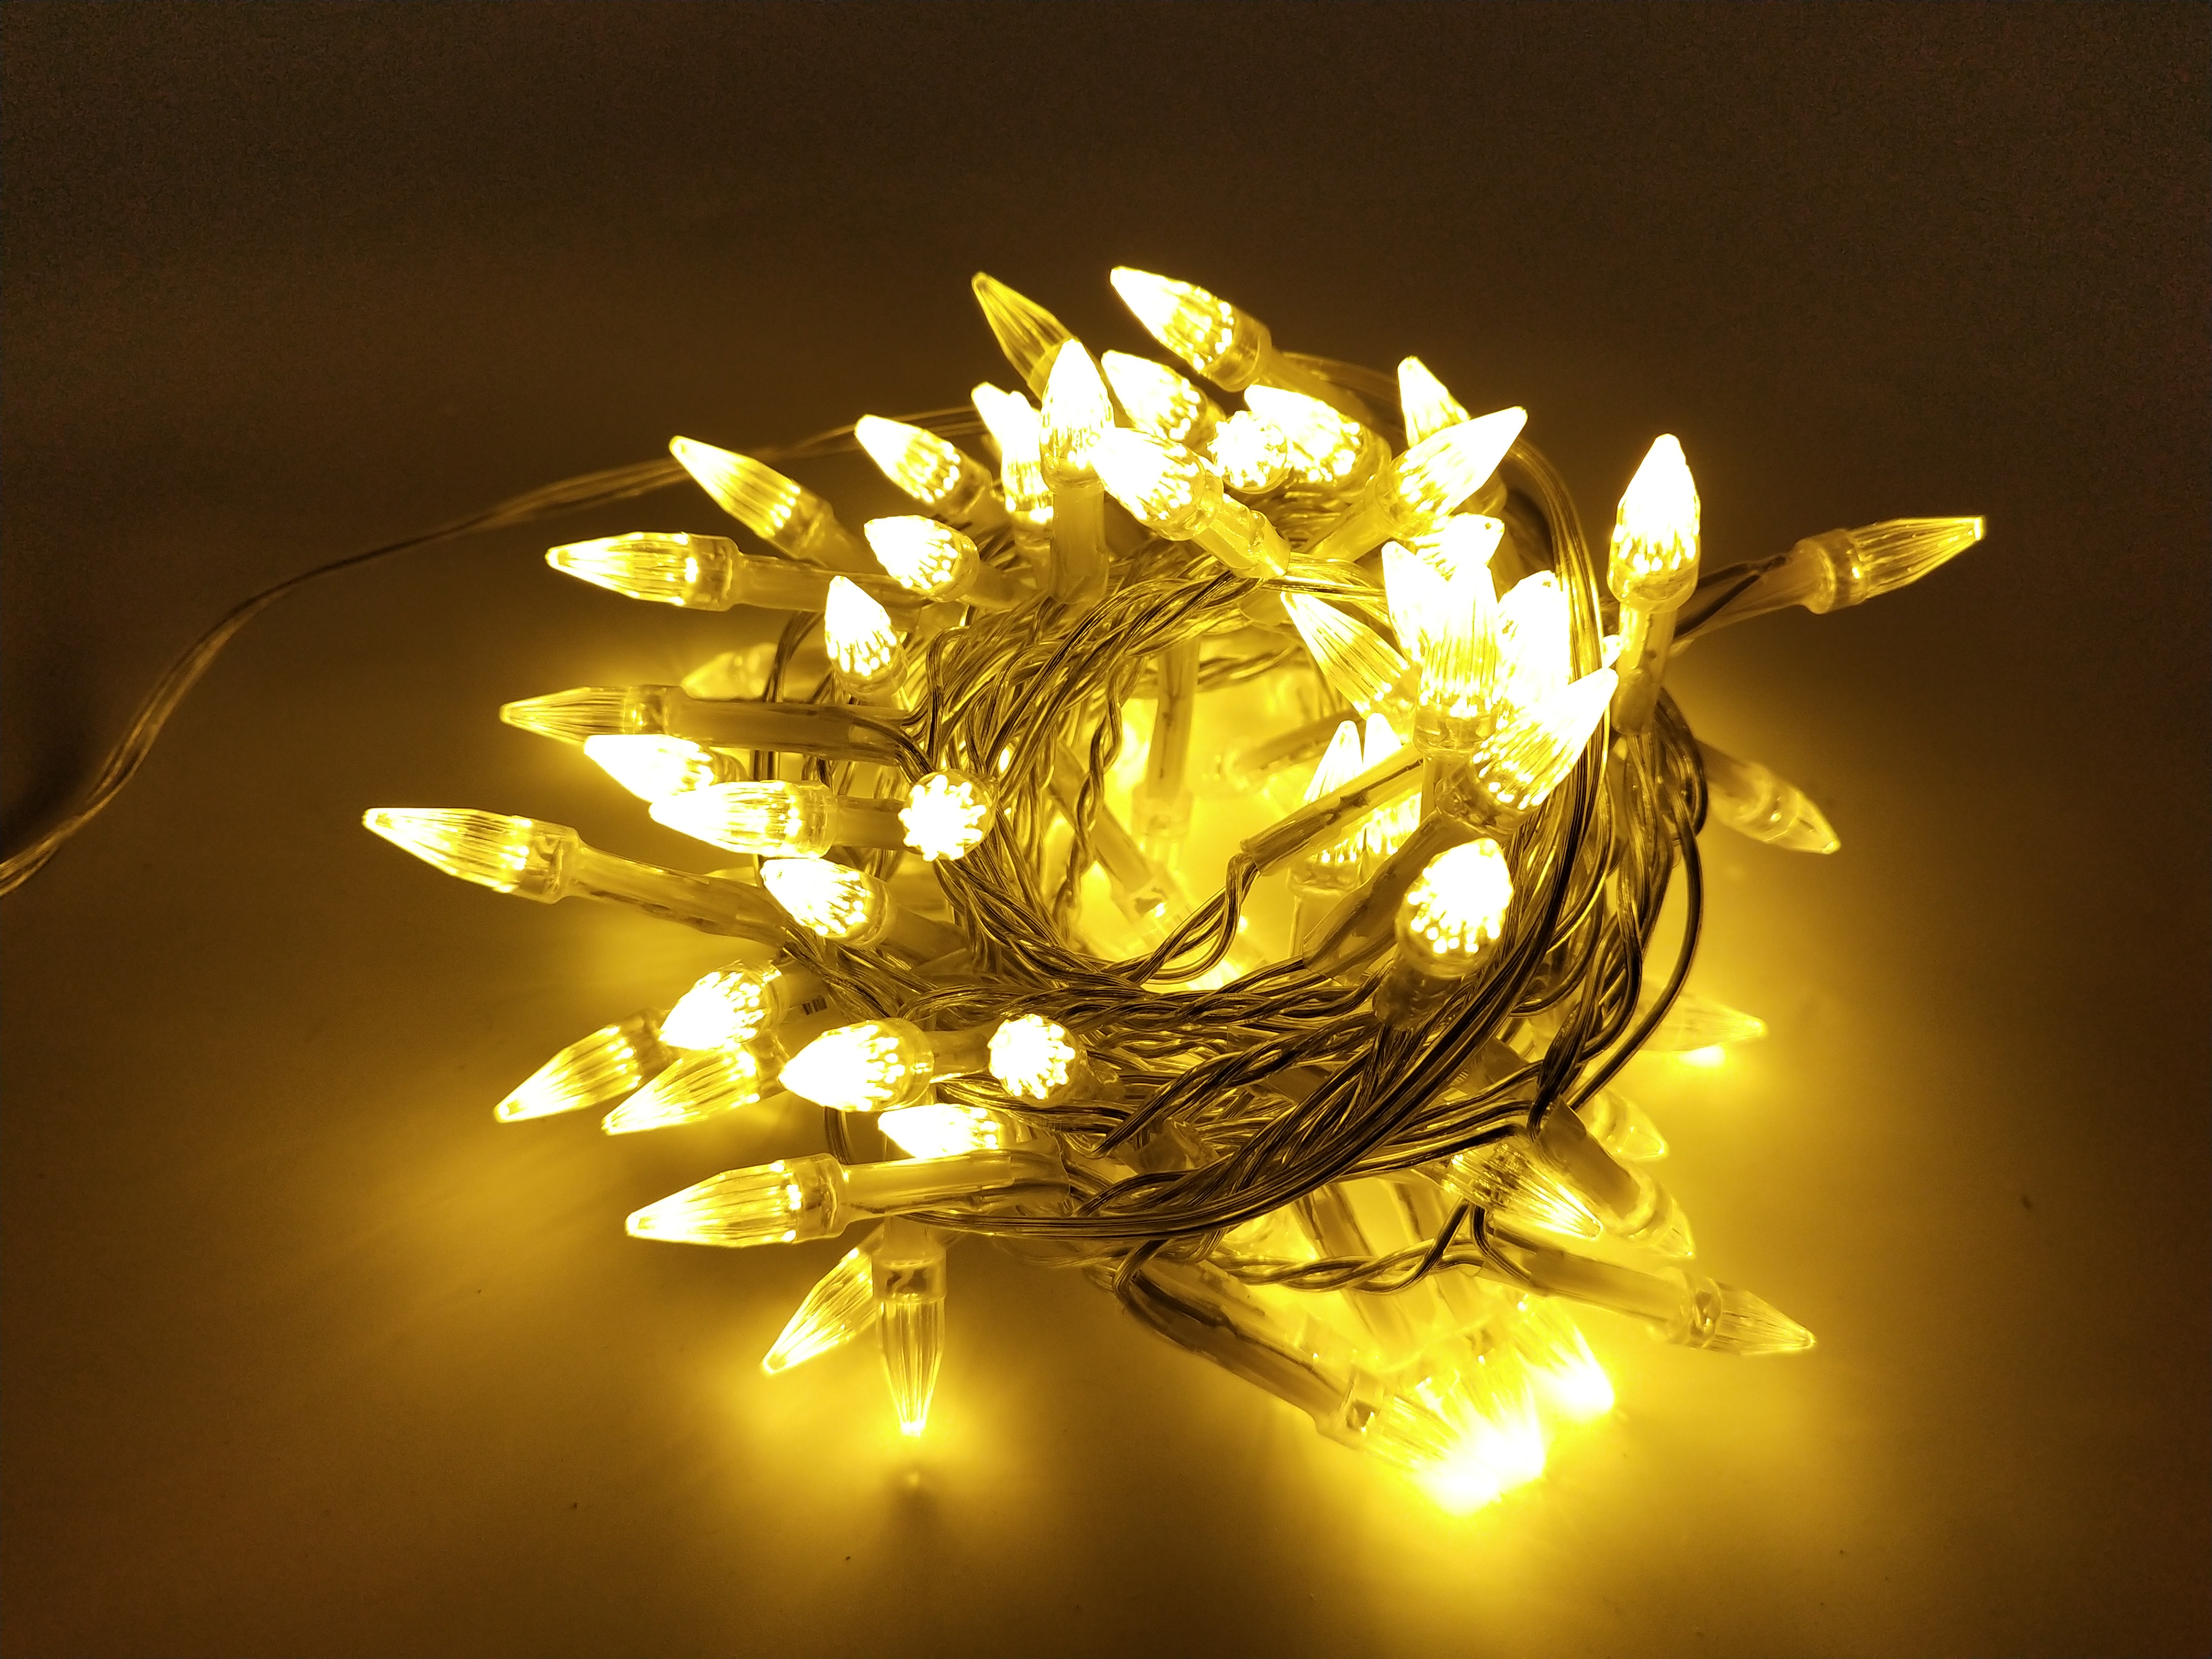 Diamond-shaped  bulb string light